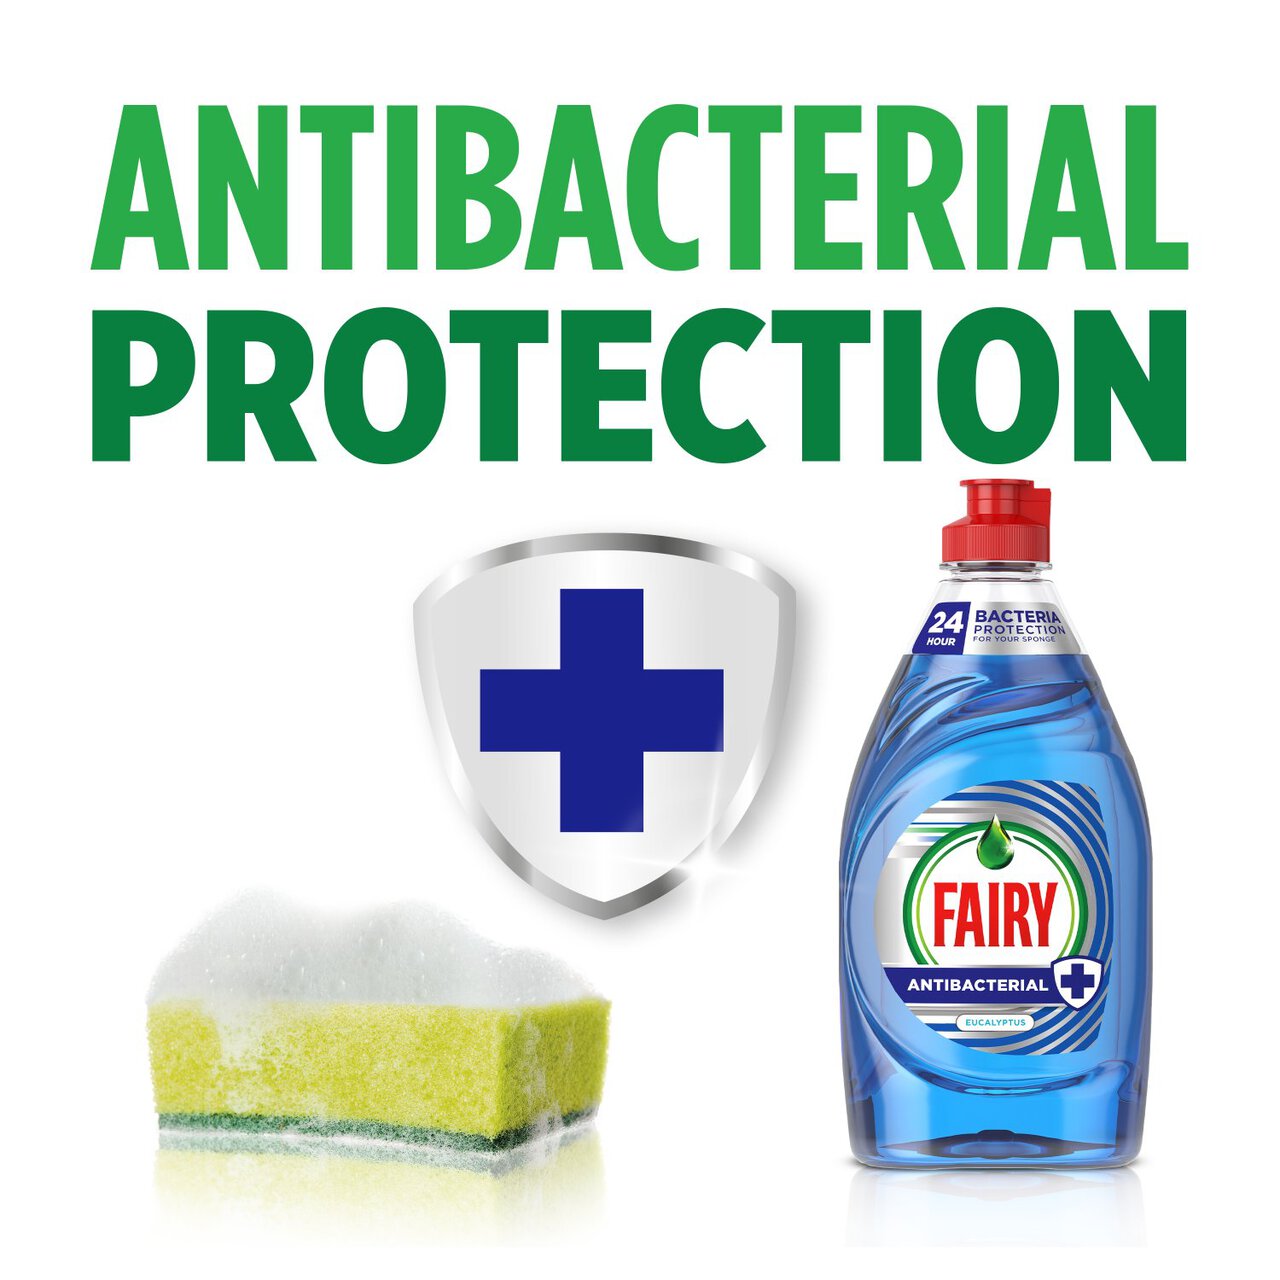 Fairy Antibacterial Lime Washing Up Liquid 383ml